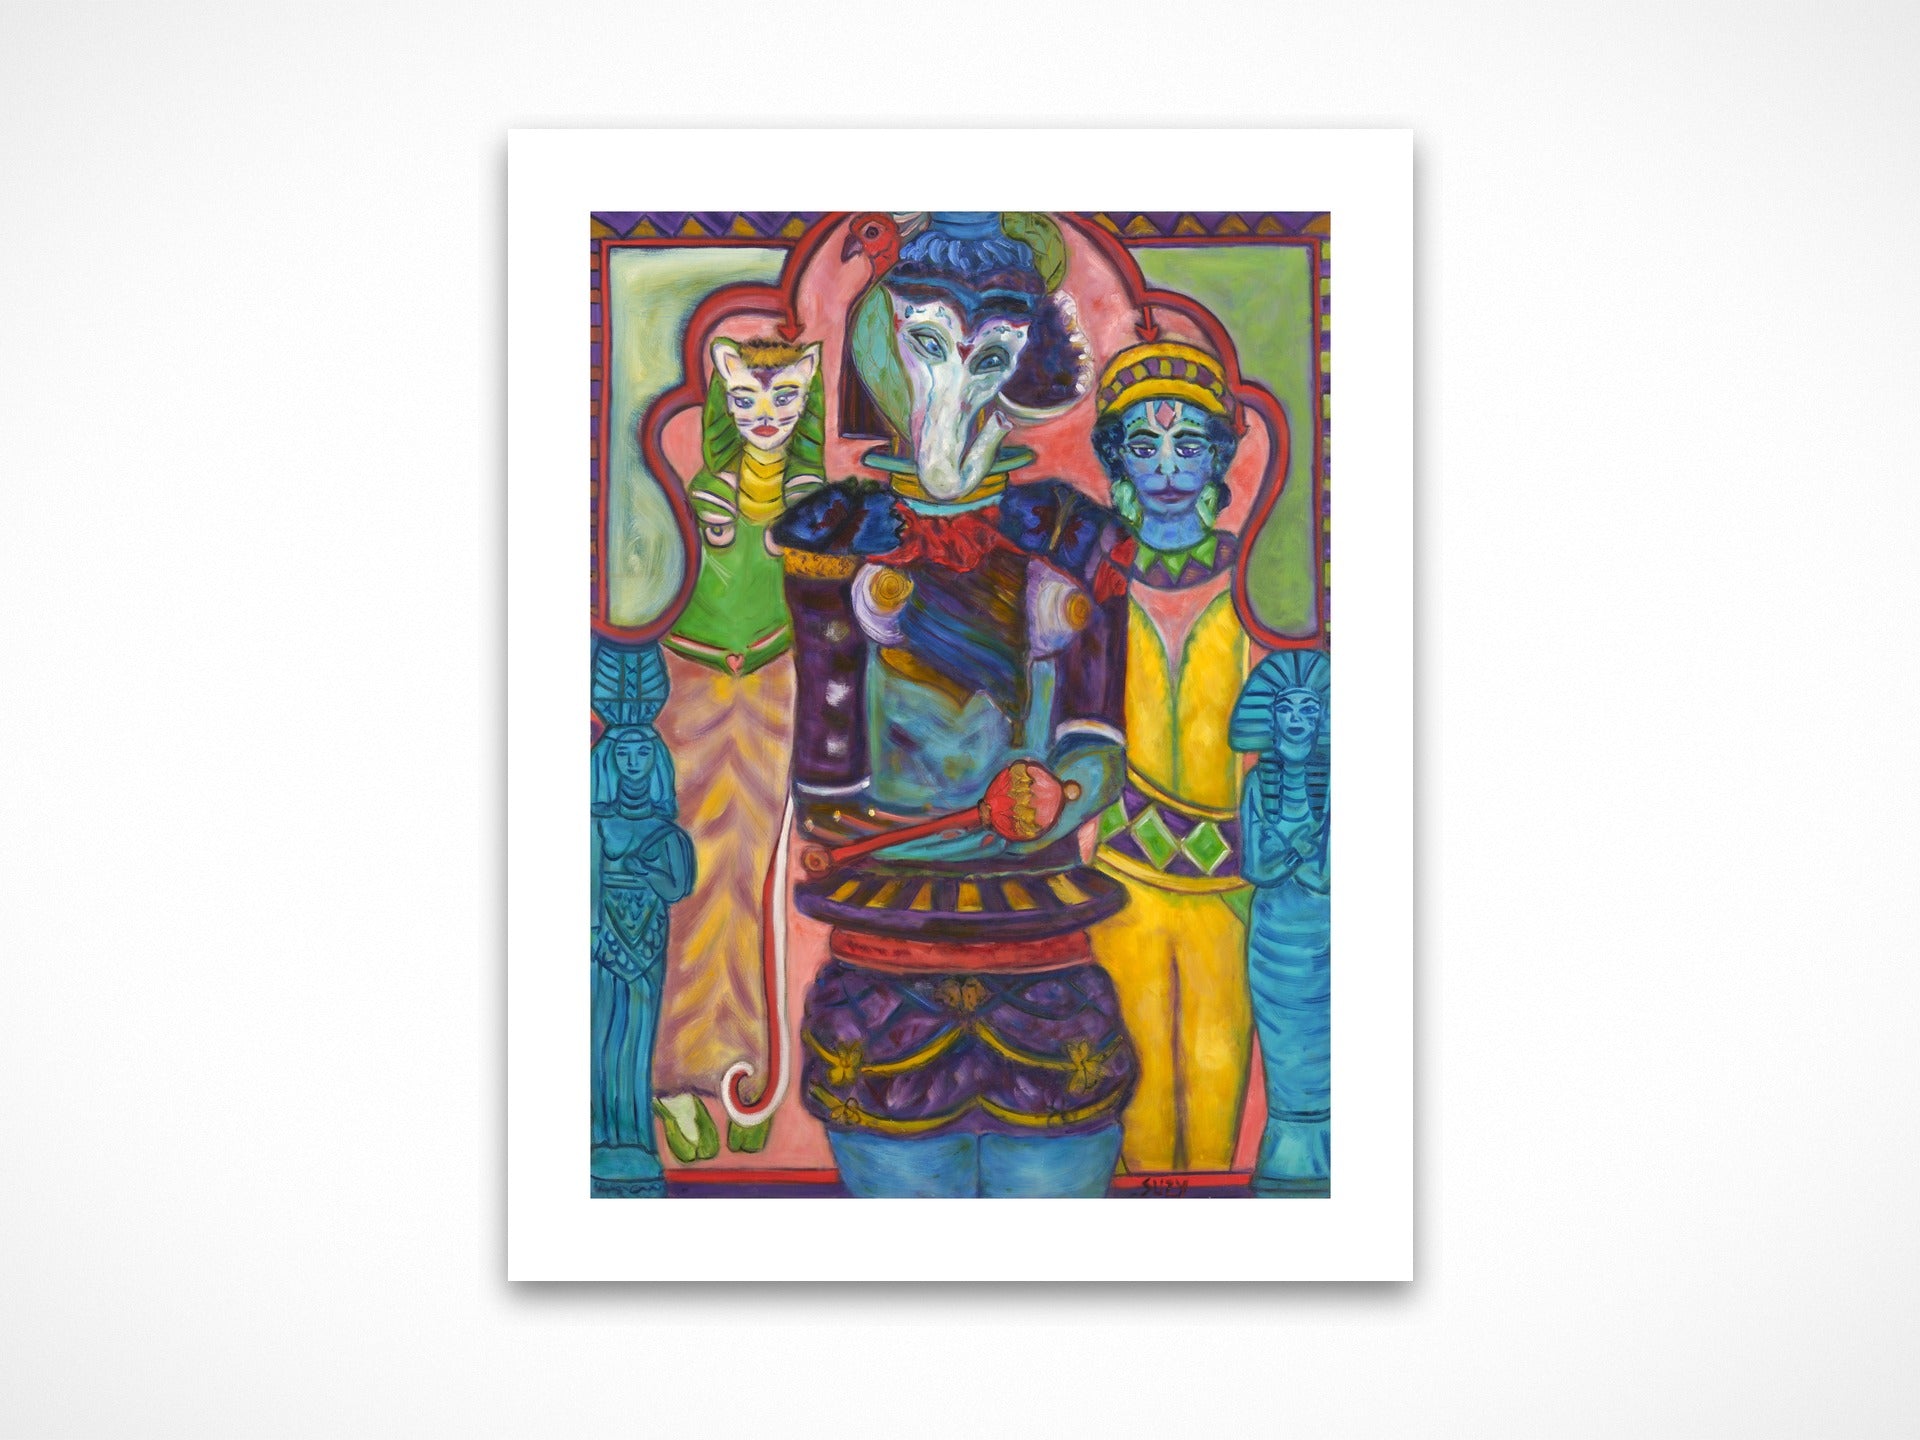 Ganesha with Consorts